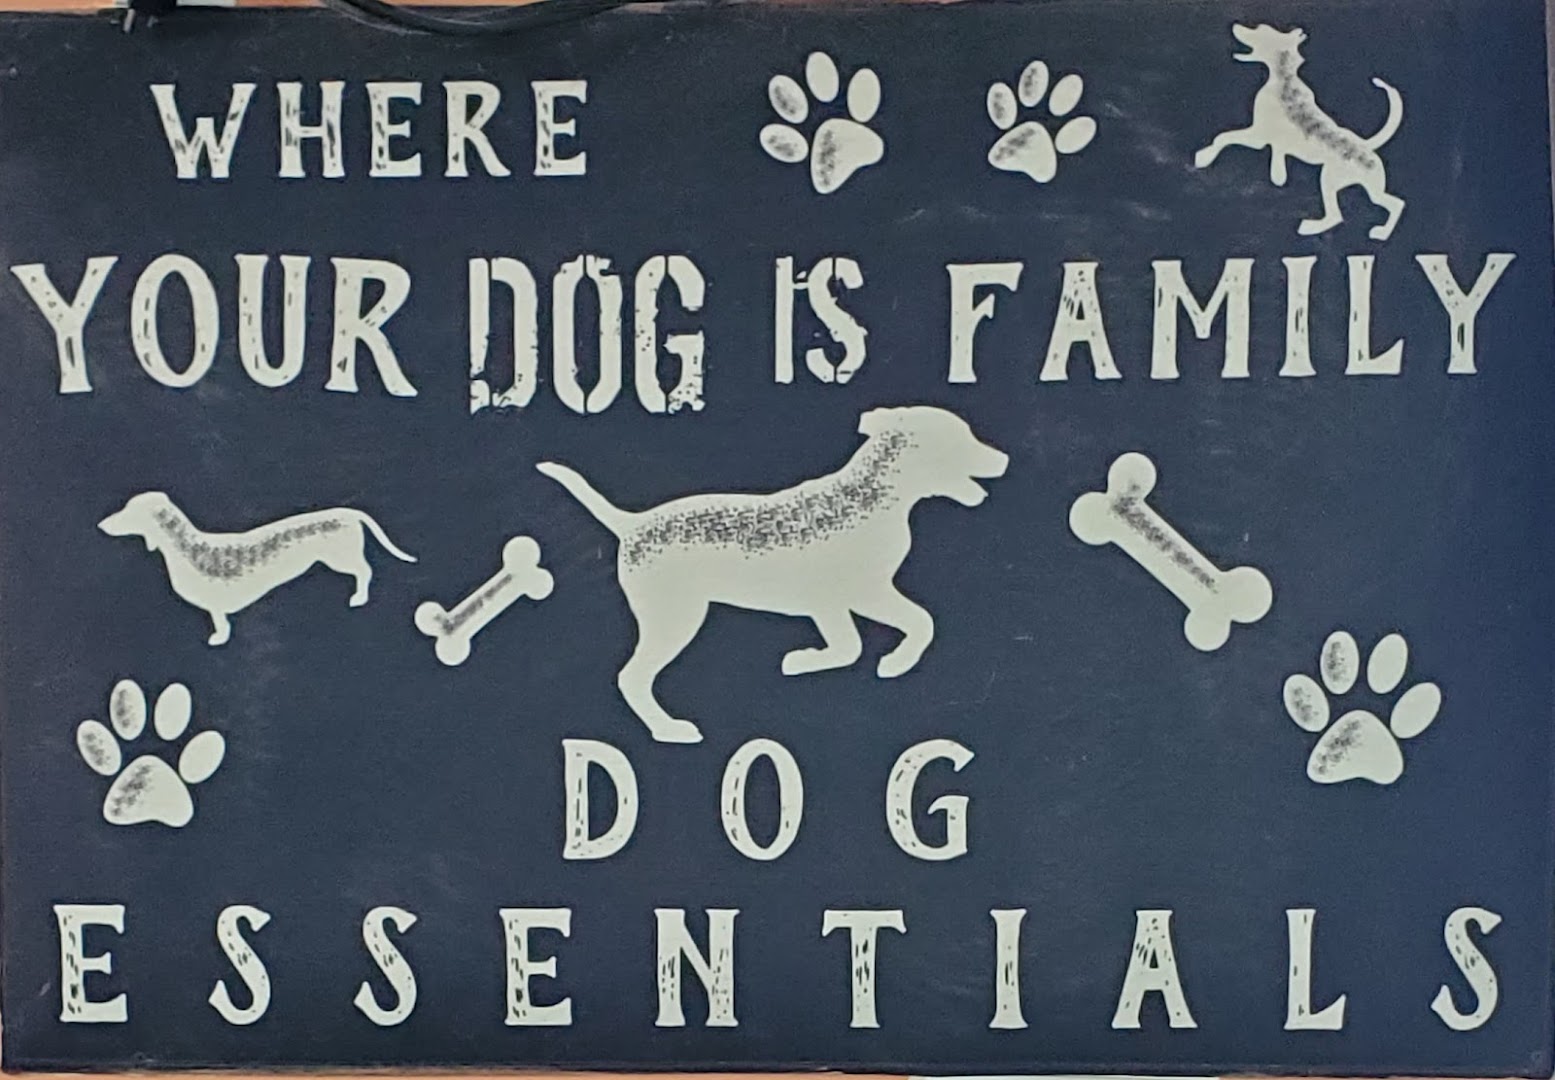 Dog Essentials, LLC